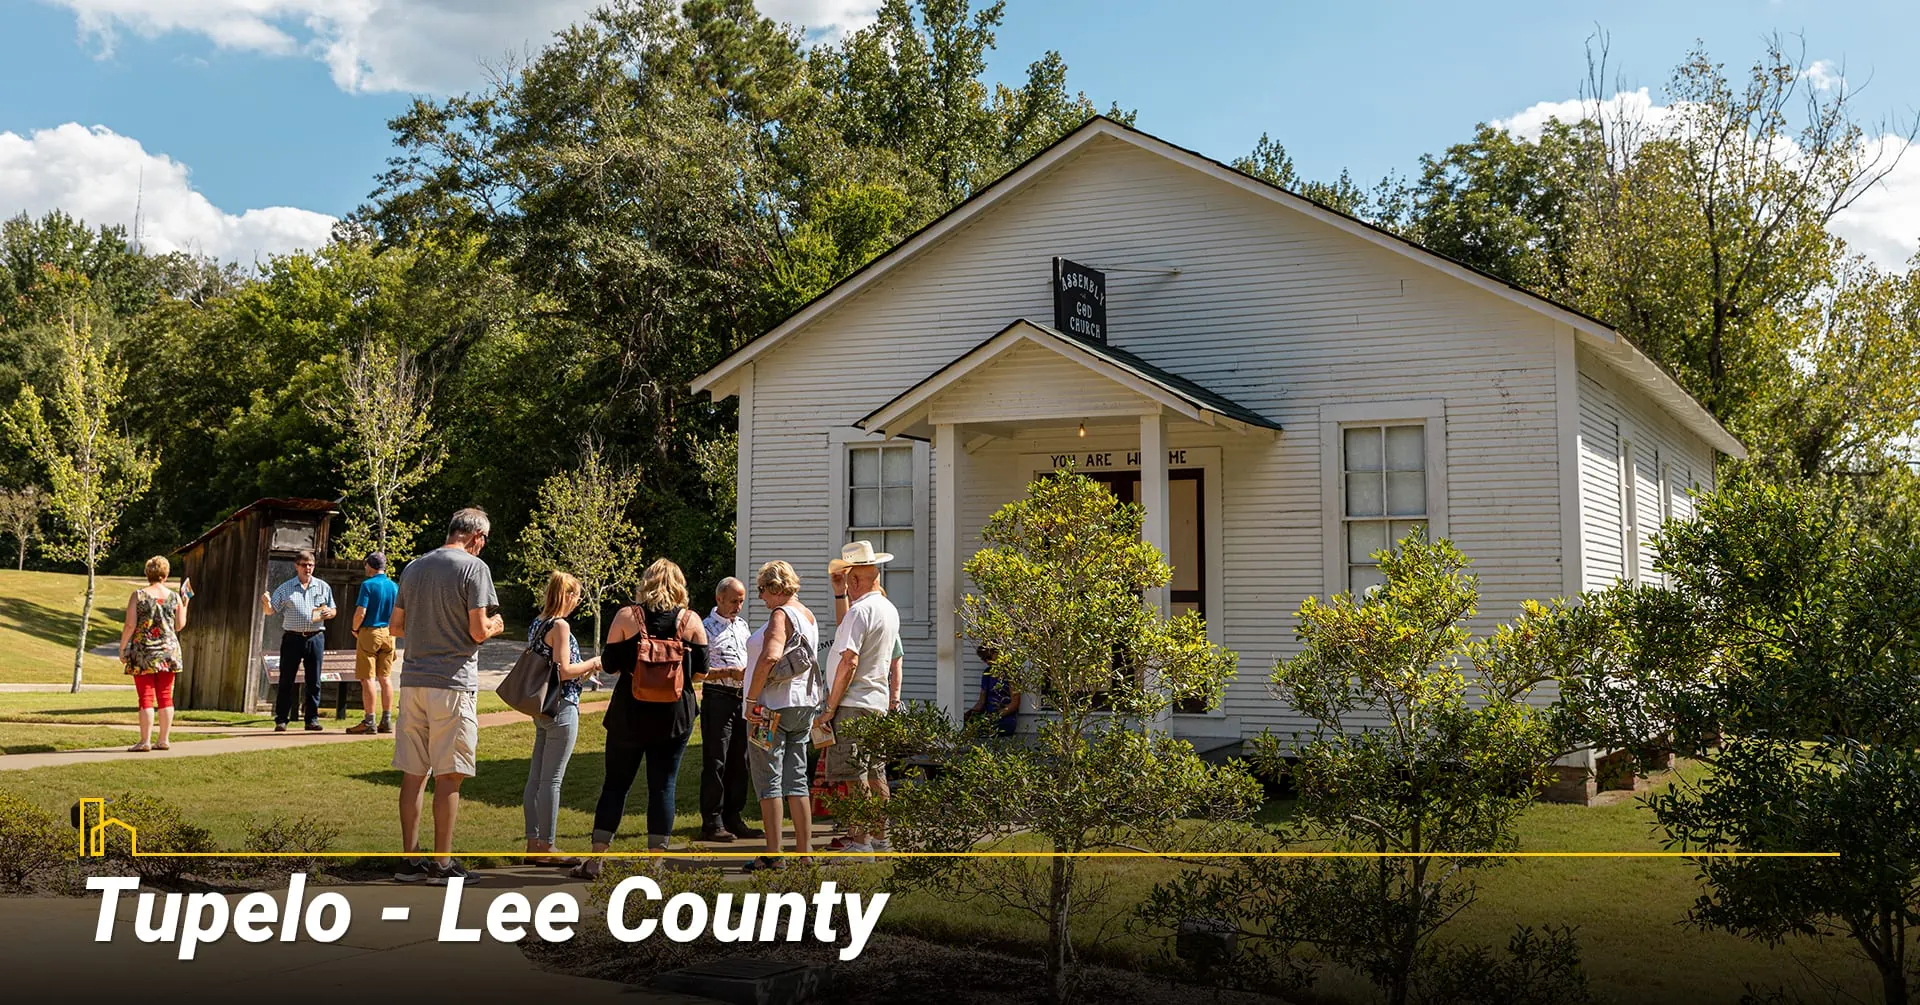 Tupelo - Lee County